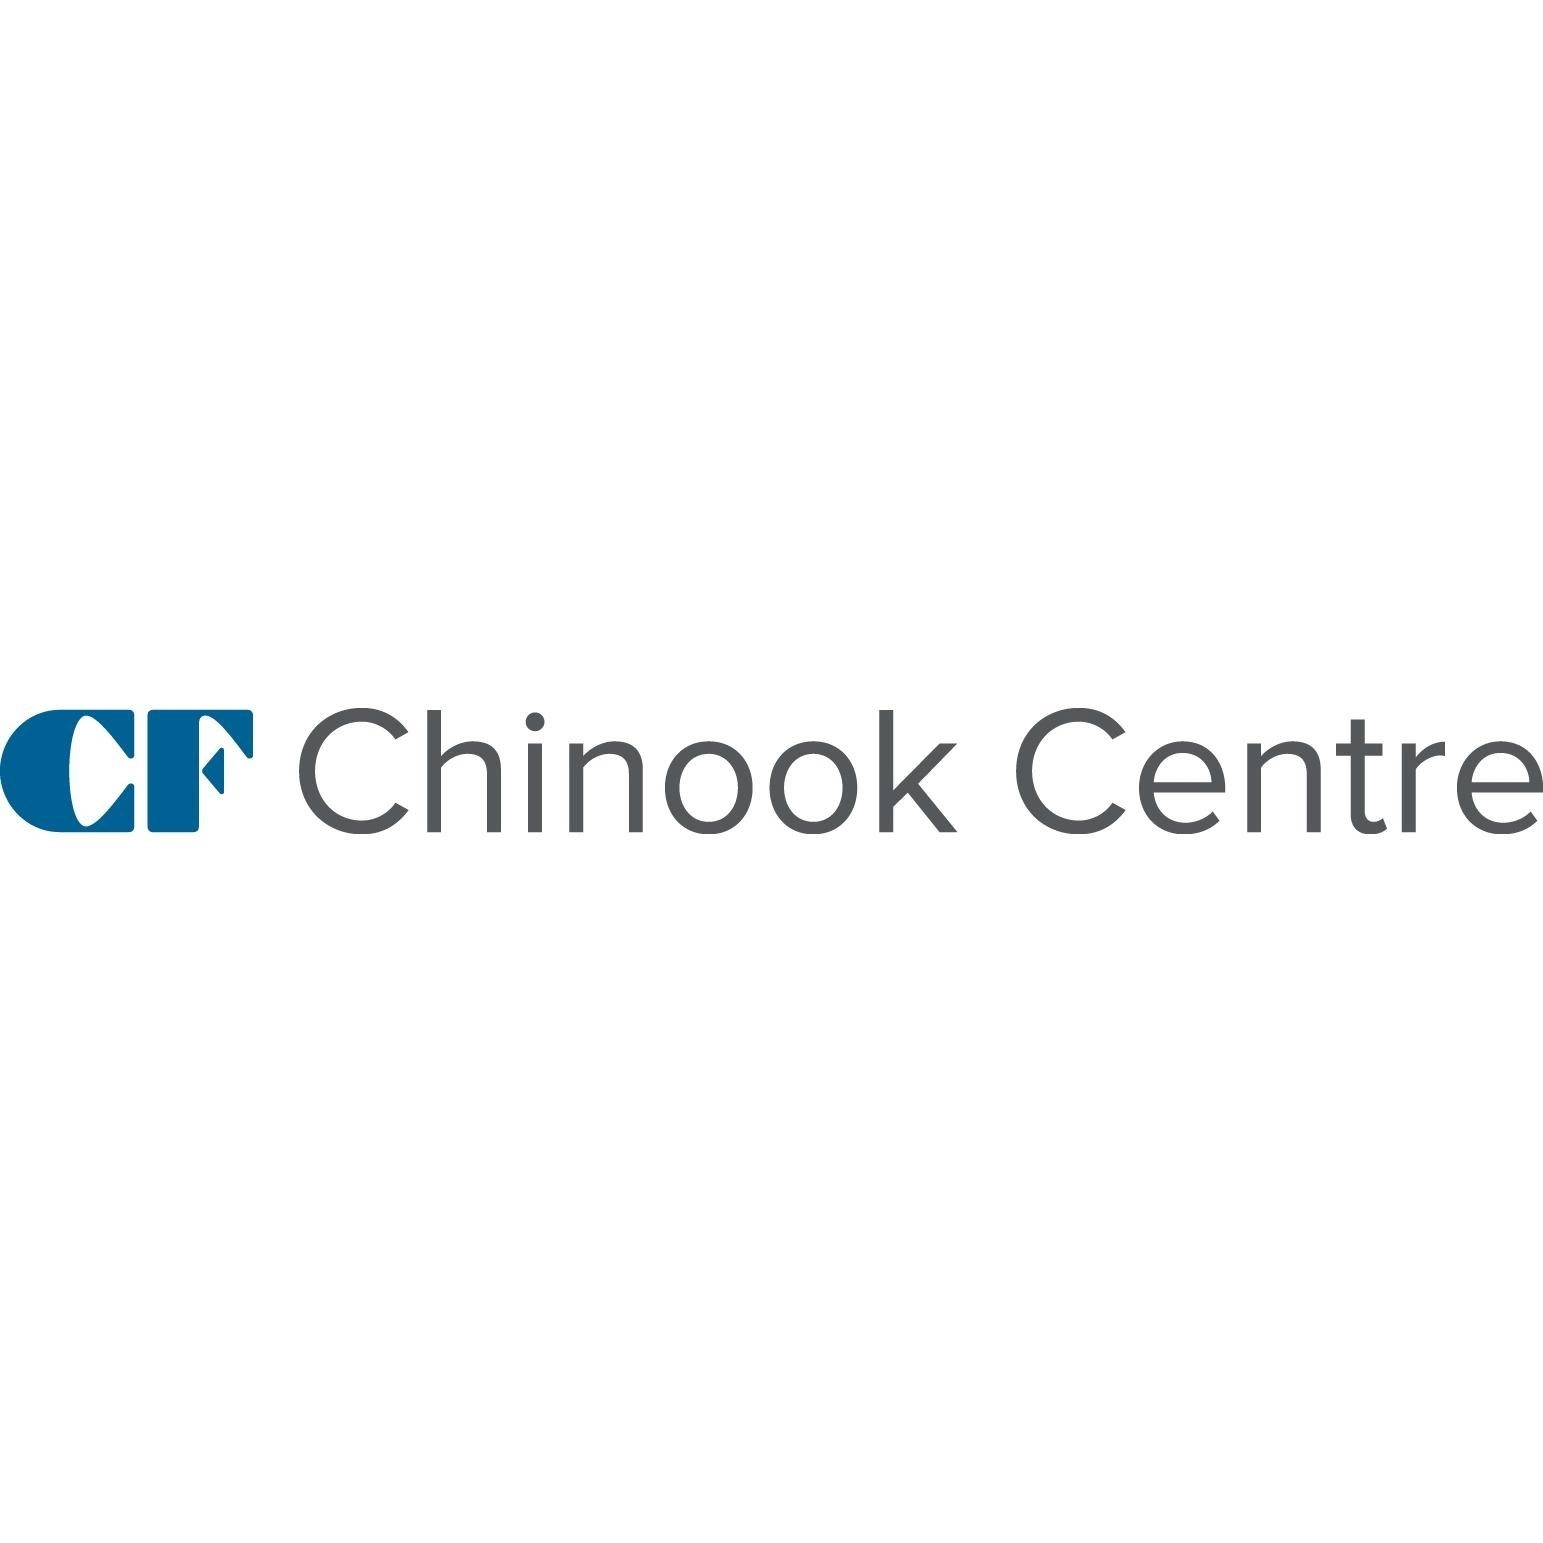 CF Chinook Centre - Shopping Centres & Malls